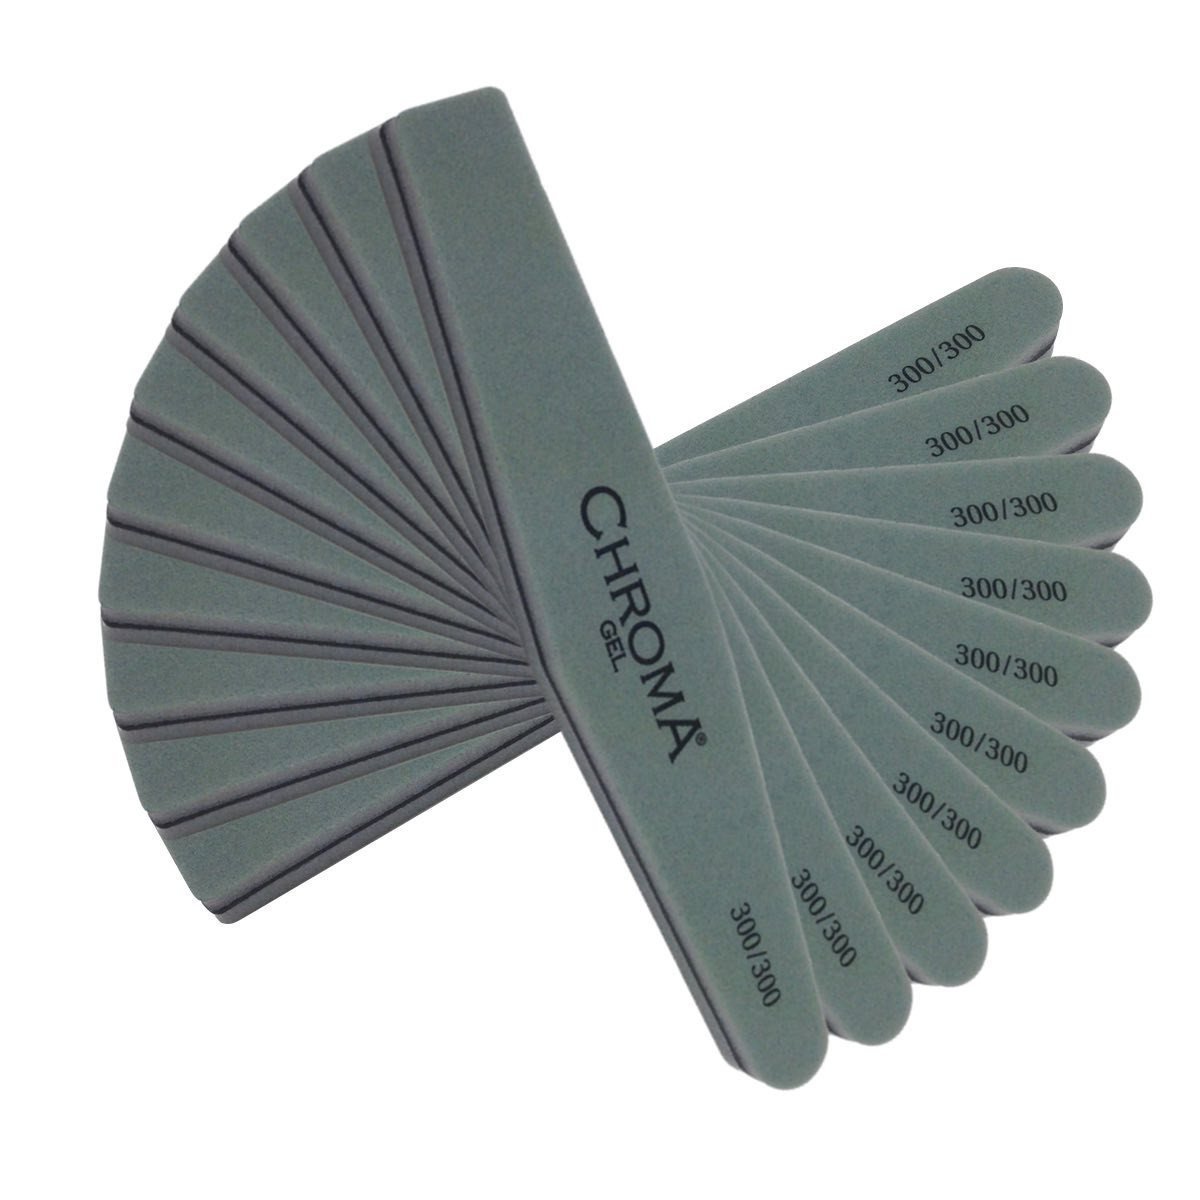 Pack of 12 Chroma Gel Nail Buffer 300 - Achieve Flawless Nails at Home - beautyhair.co.ukChroma Gel